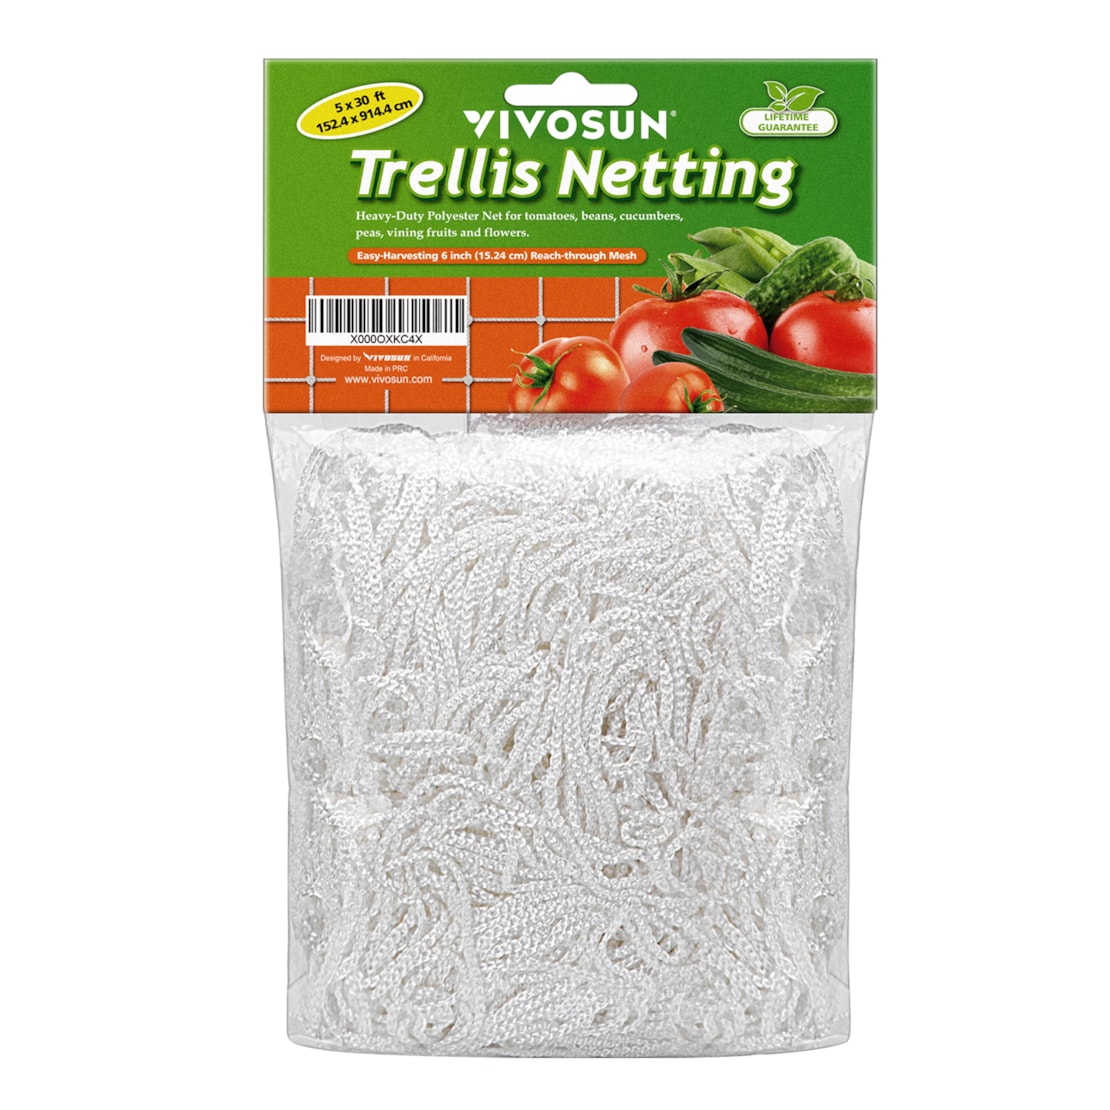 VIVOSUN 5 x 30 ft Heavy-duty Polyester Plant Trellis Netting 1-Pack